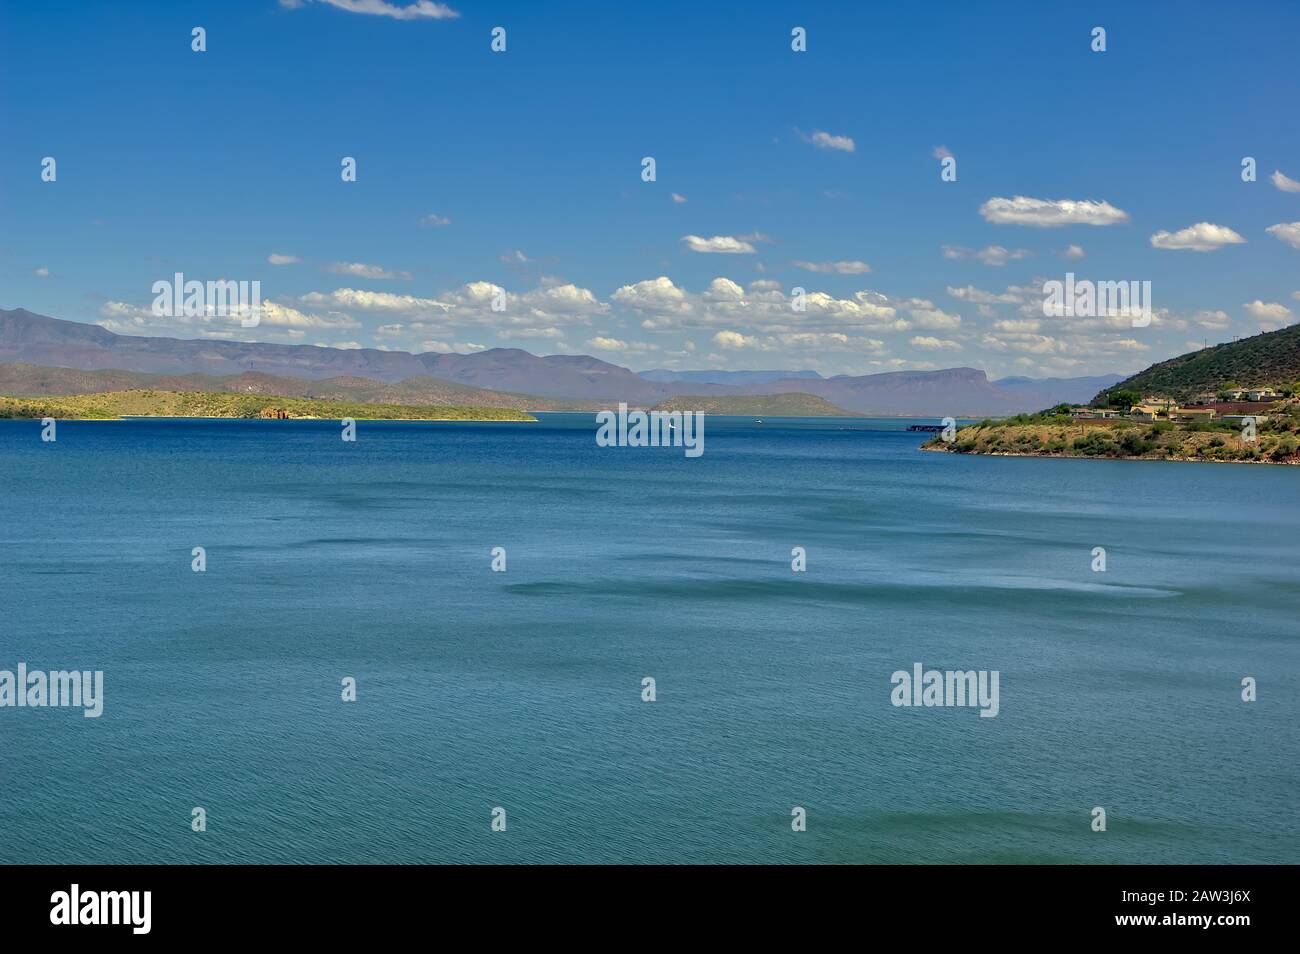 A view of Arizona's Roosevelt Lake. Stock Photo